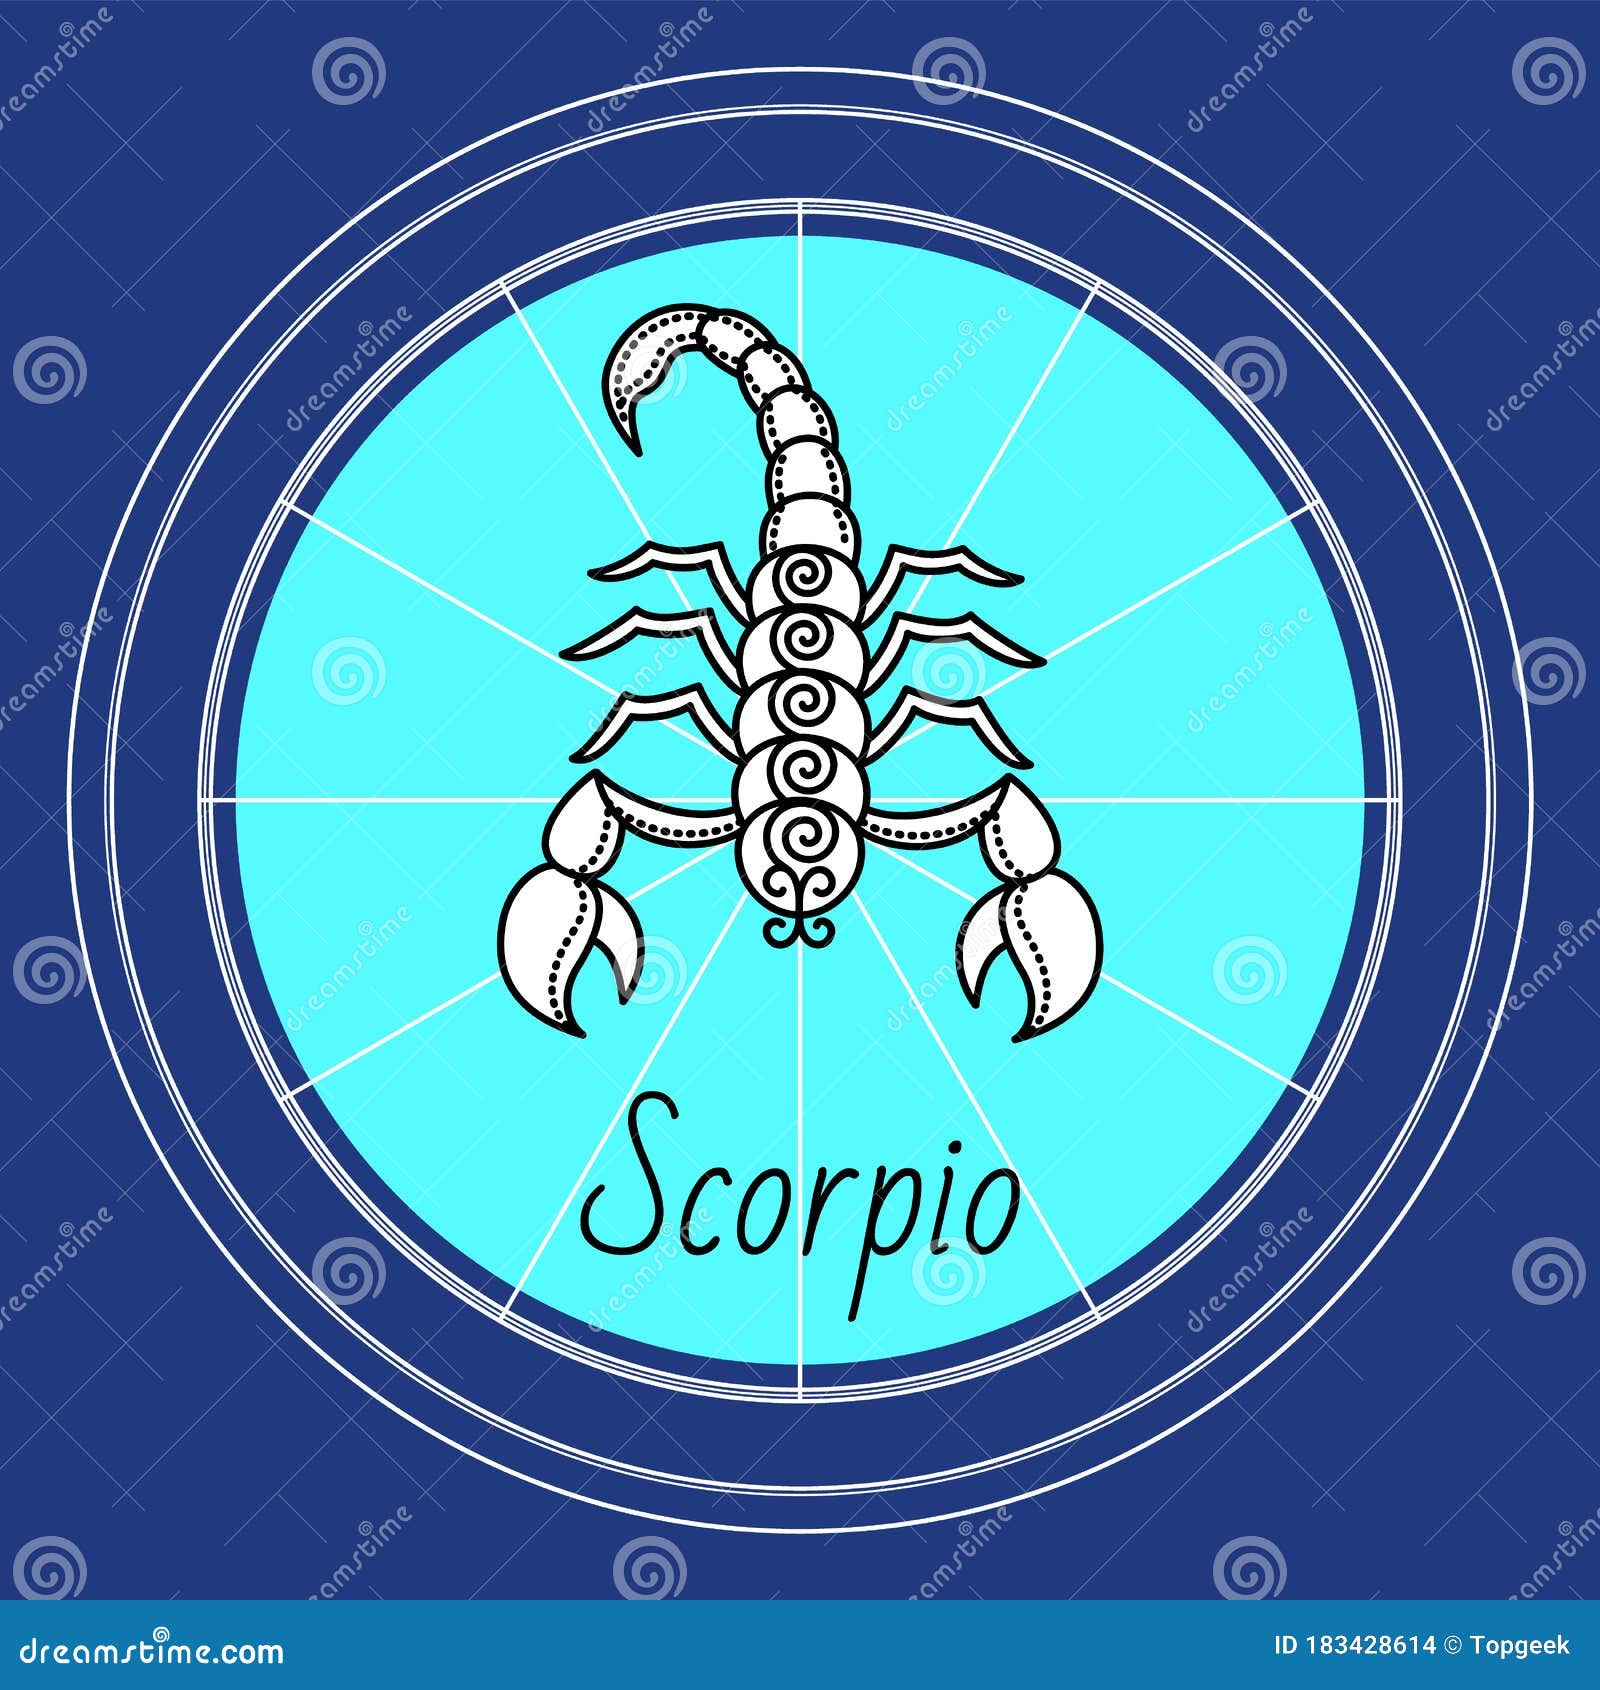 Scorpio Glyphs Royalty-Free Stock Photo | CartoonDealer.com #99471